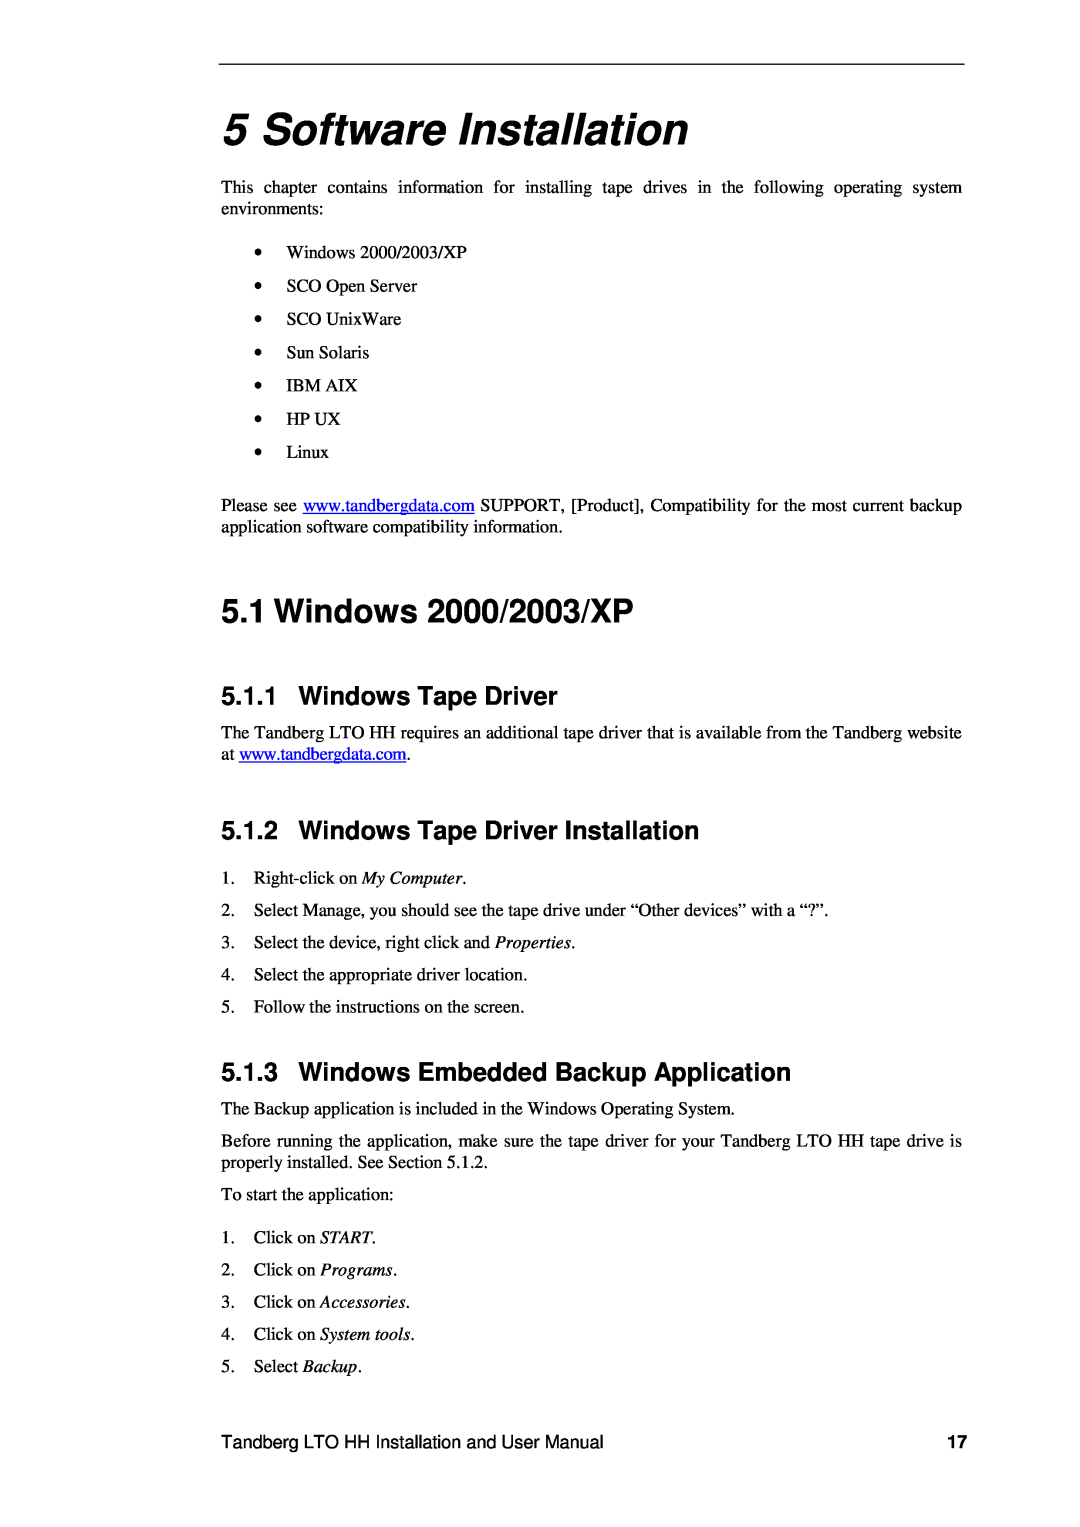 Tandberg Data LTO-3 HH, LTO-2 HH Software Installation, Windows 2000/2003/XP, Windows Tape Driver Installation 